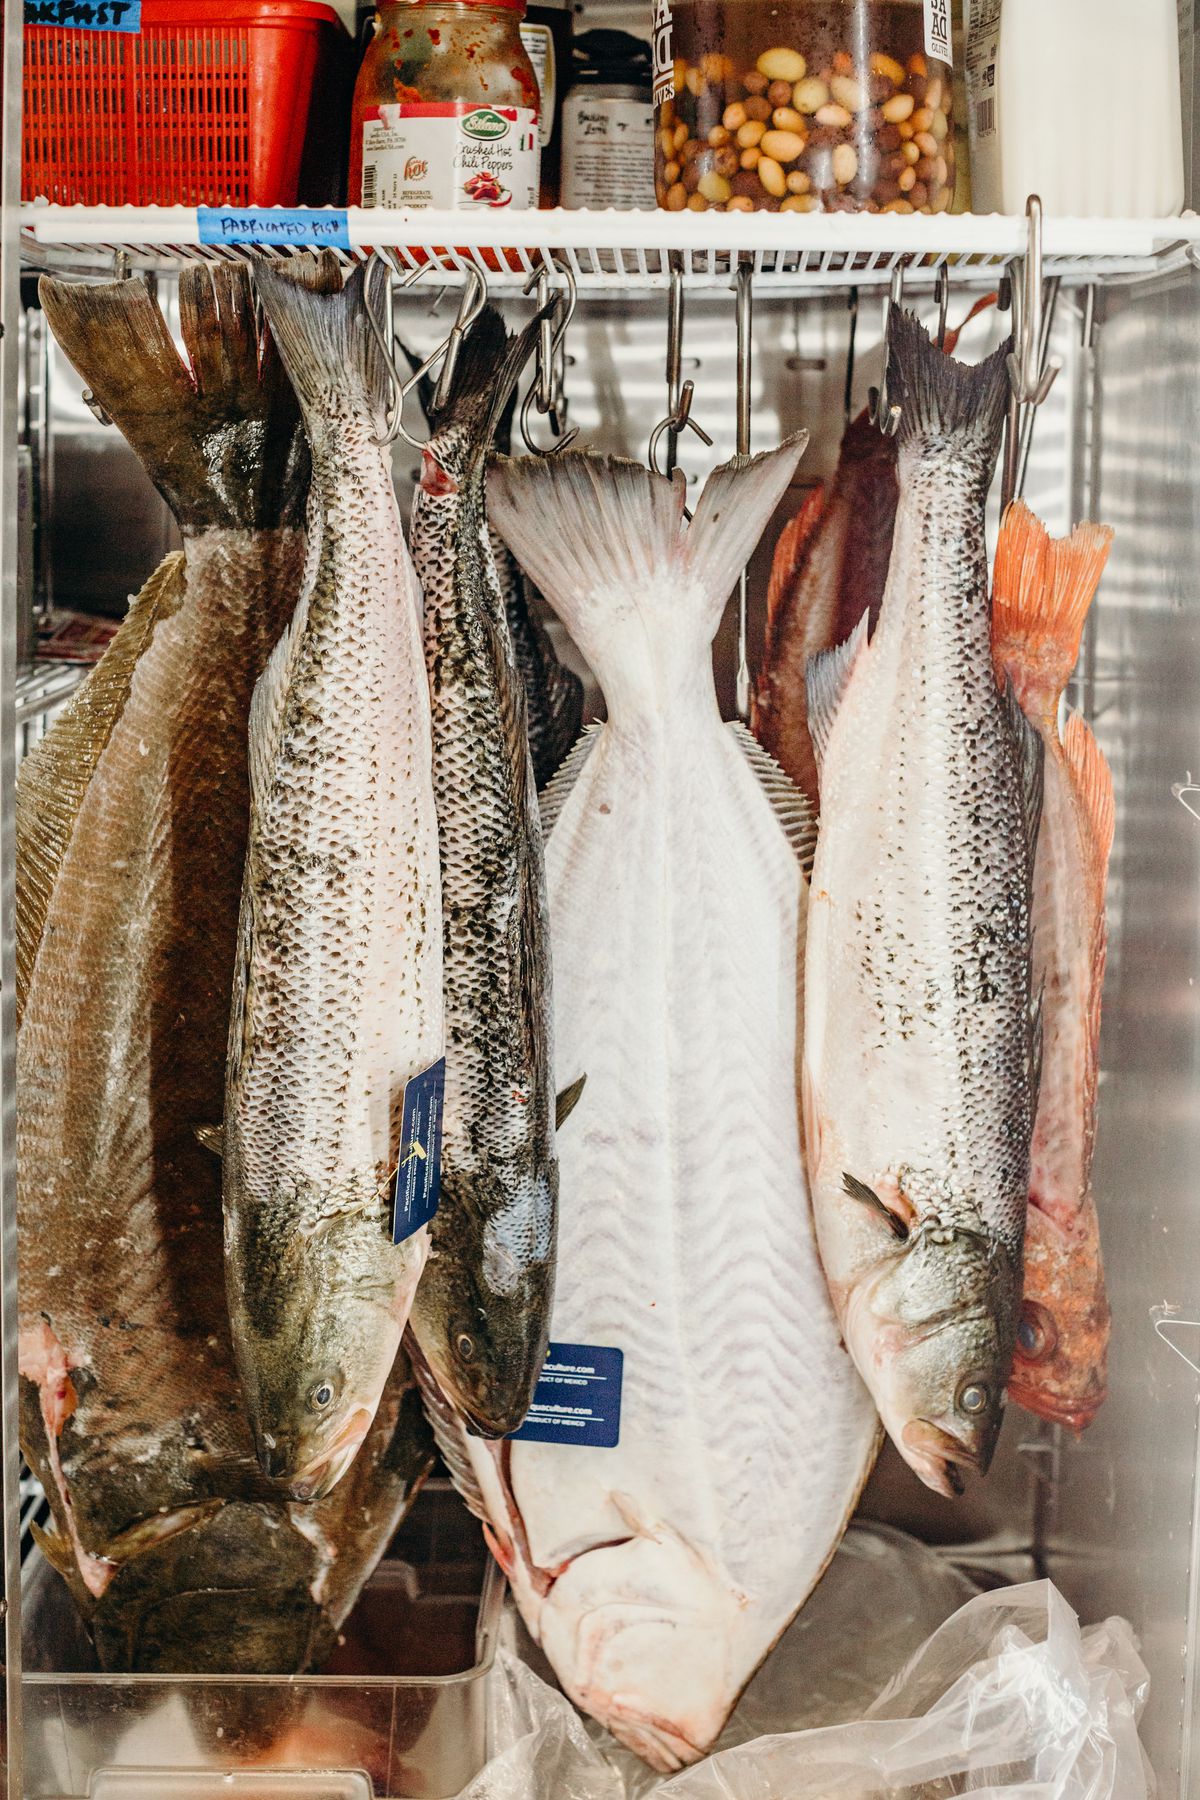 Various fish hang inside a refrigerator.